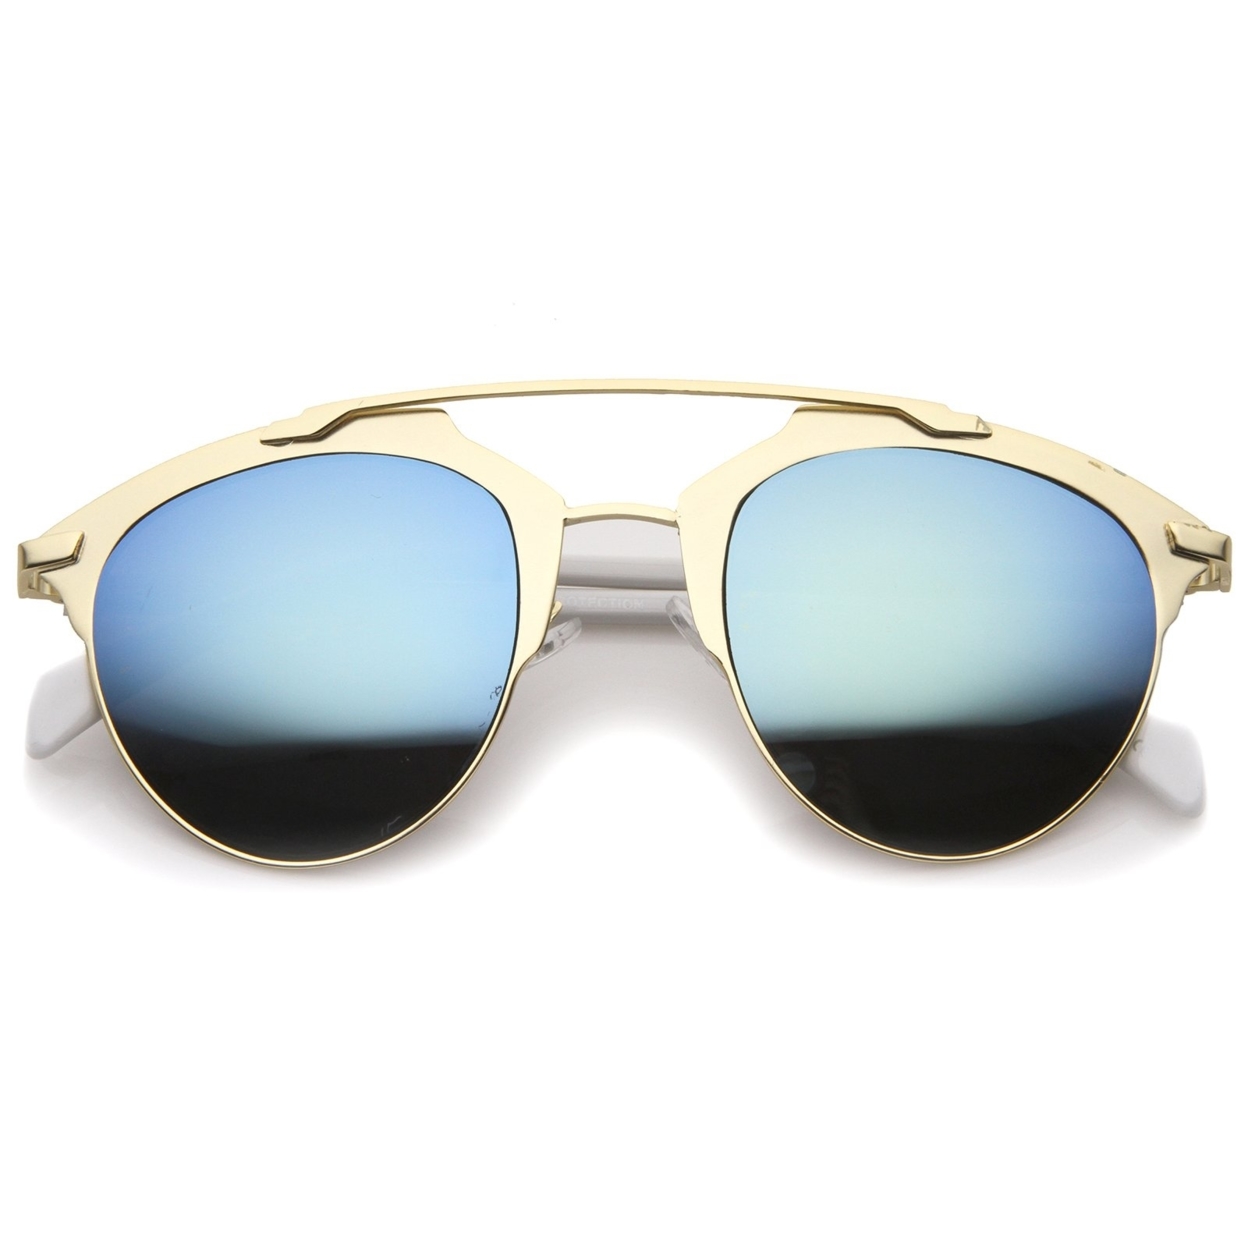 Modern Fashion Metal Double Bridge Mirror Lens Pantos Aviator Sunglasses 50mm - Silver-Black / Magenta Mirror